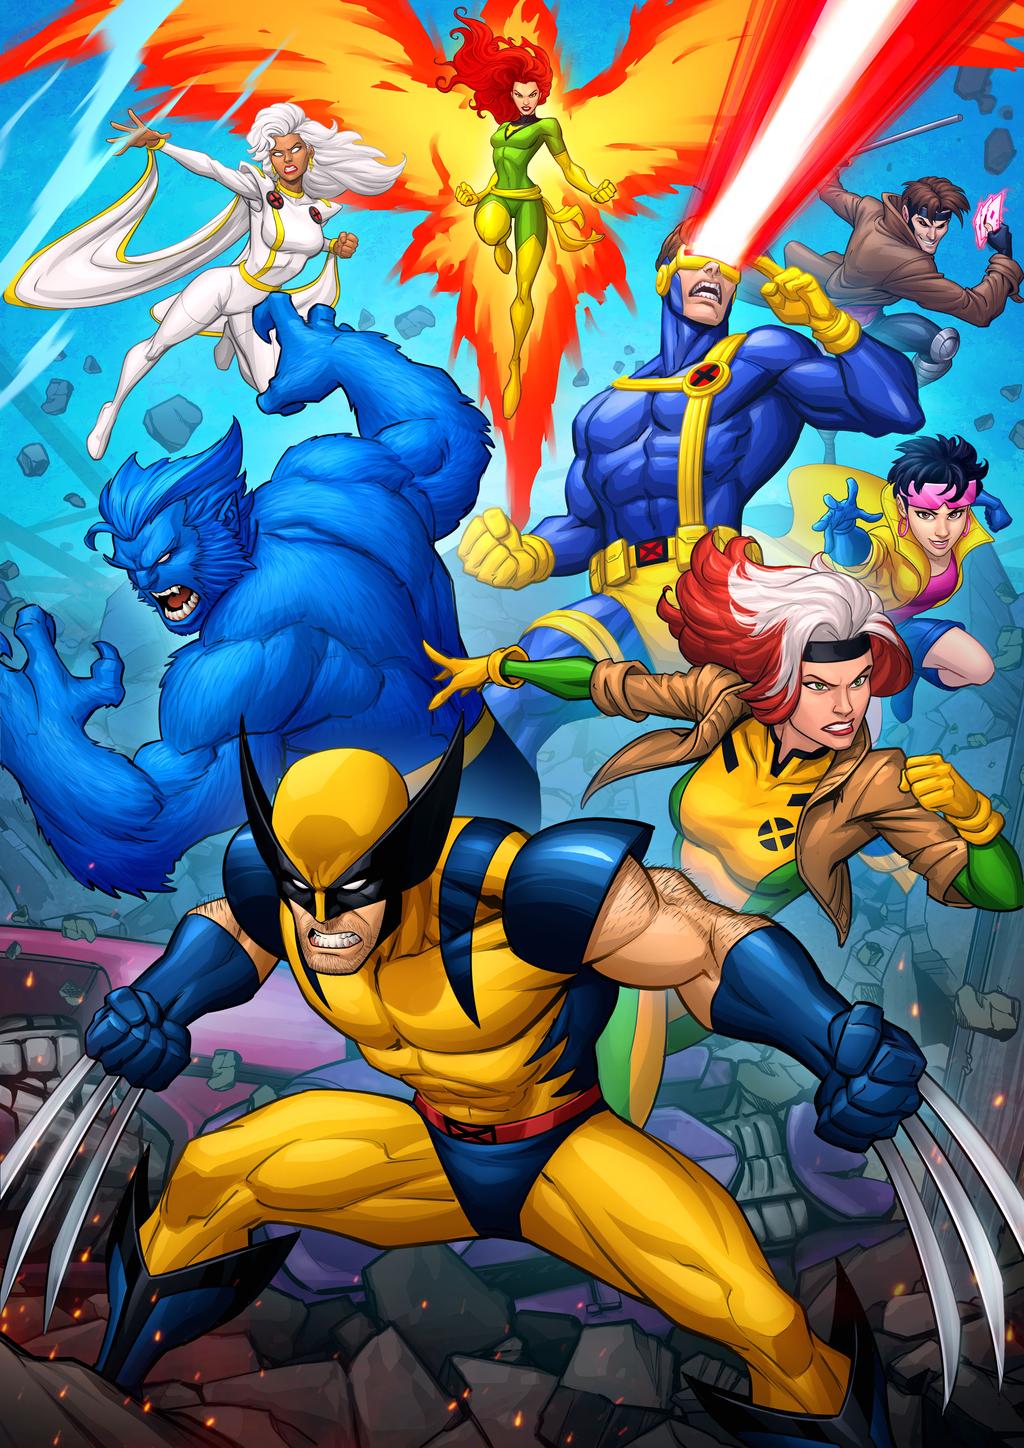 General 1024x1448 Patrick Brown fan art Wolverine X-Men Cyclops Jean Grey Gambit Storm (character) Beast (character) Rogue (X-men) fire phoenix Jubilee Hank McCoy Scott Summers comics